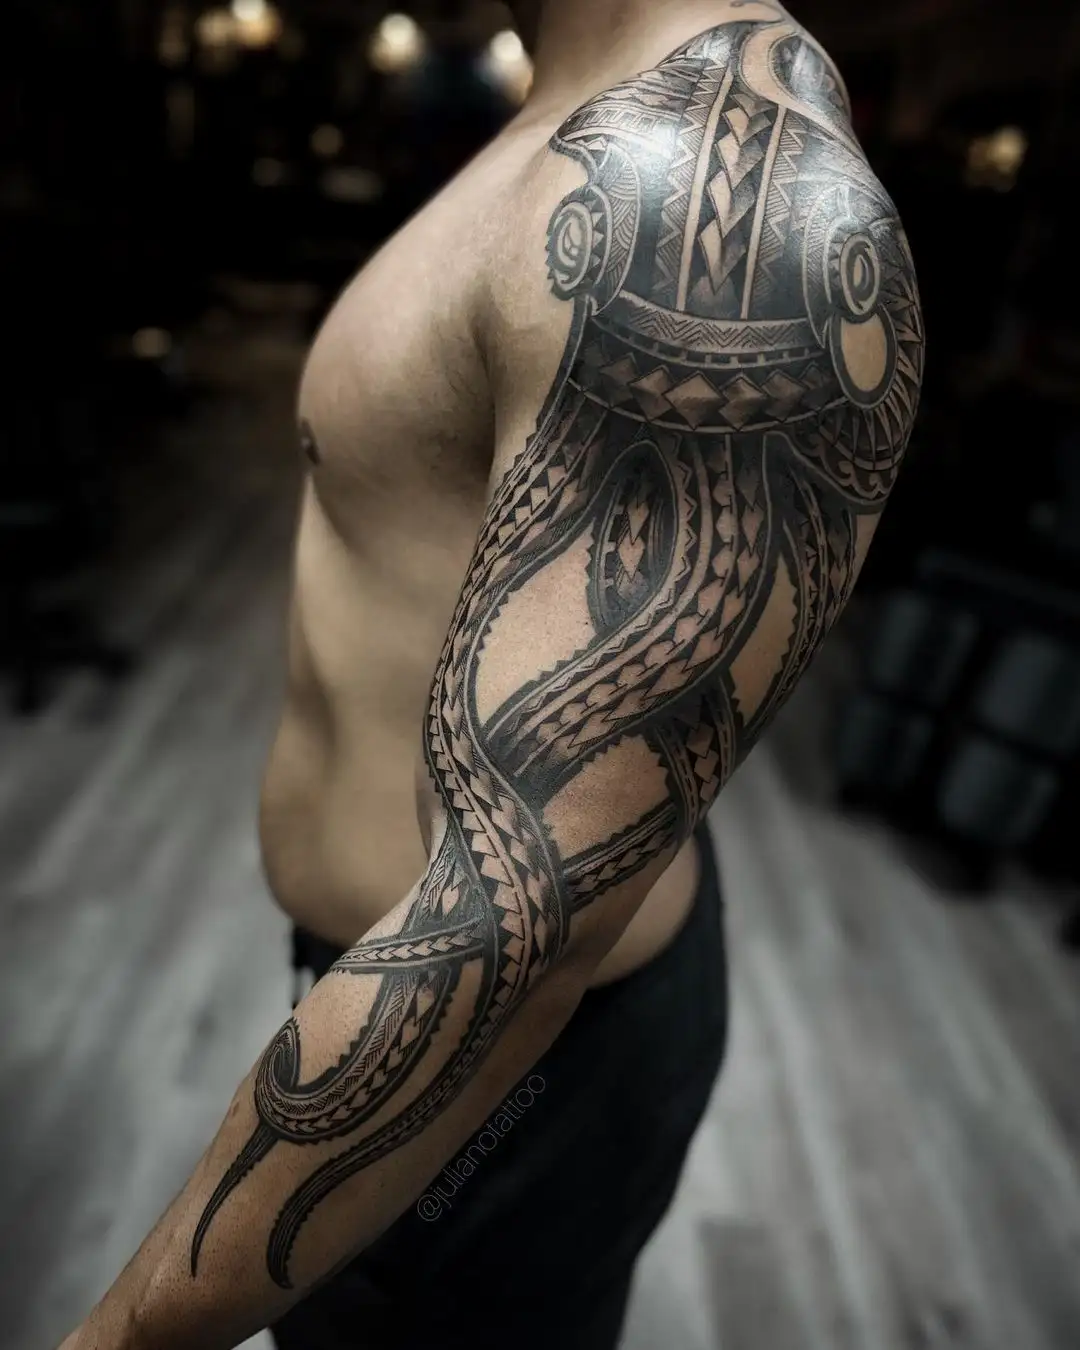 Sleeve Tattoos Ideas for Men